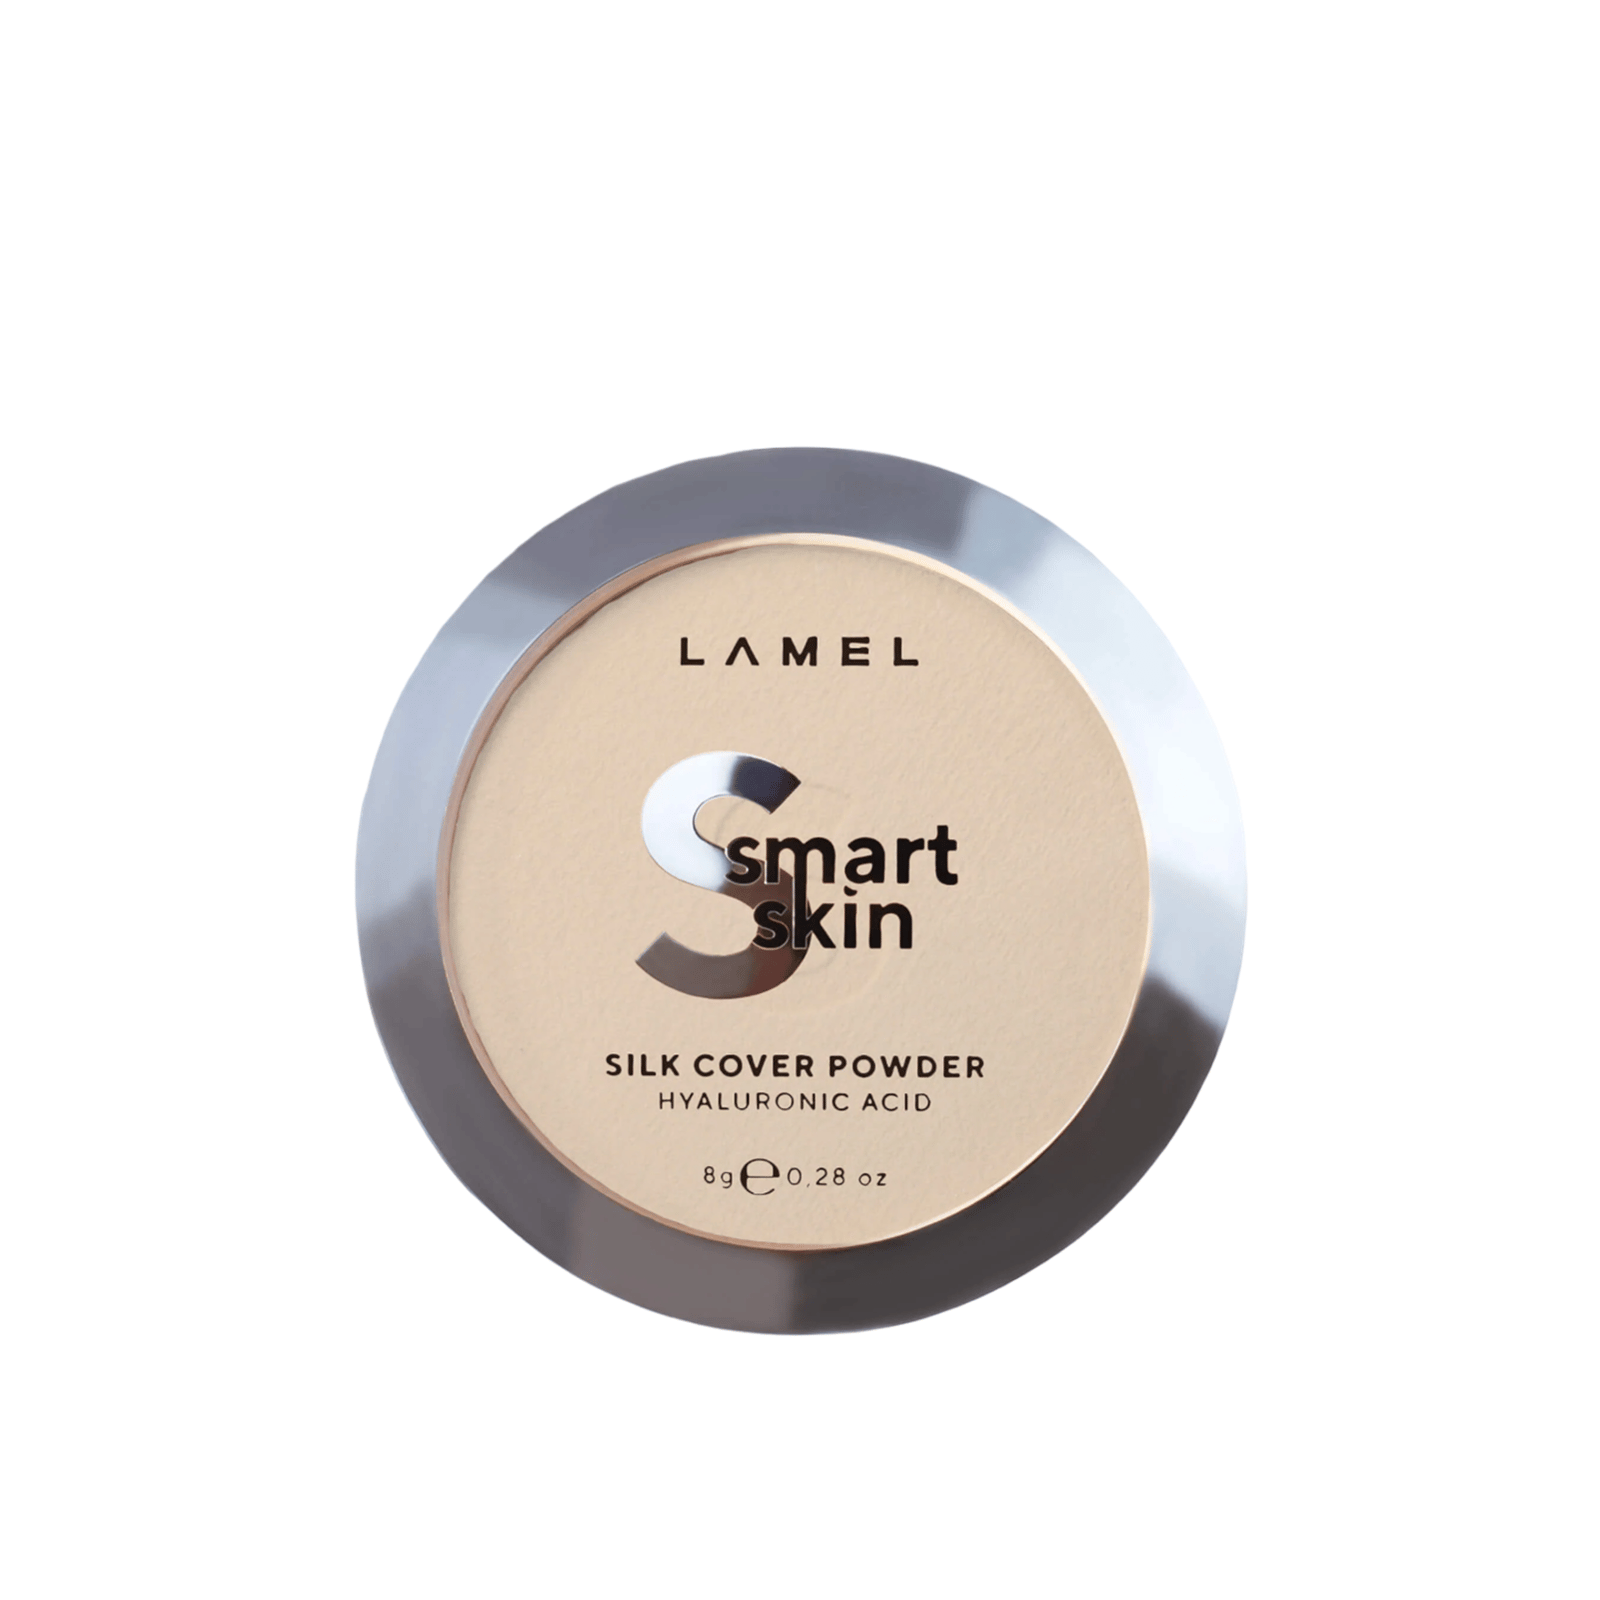 Lamel Smart Skin Silk Cover Powder 401 Vanilla 8g (0.28oz)